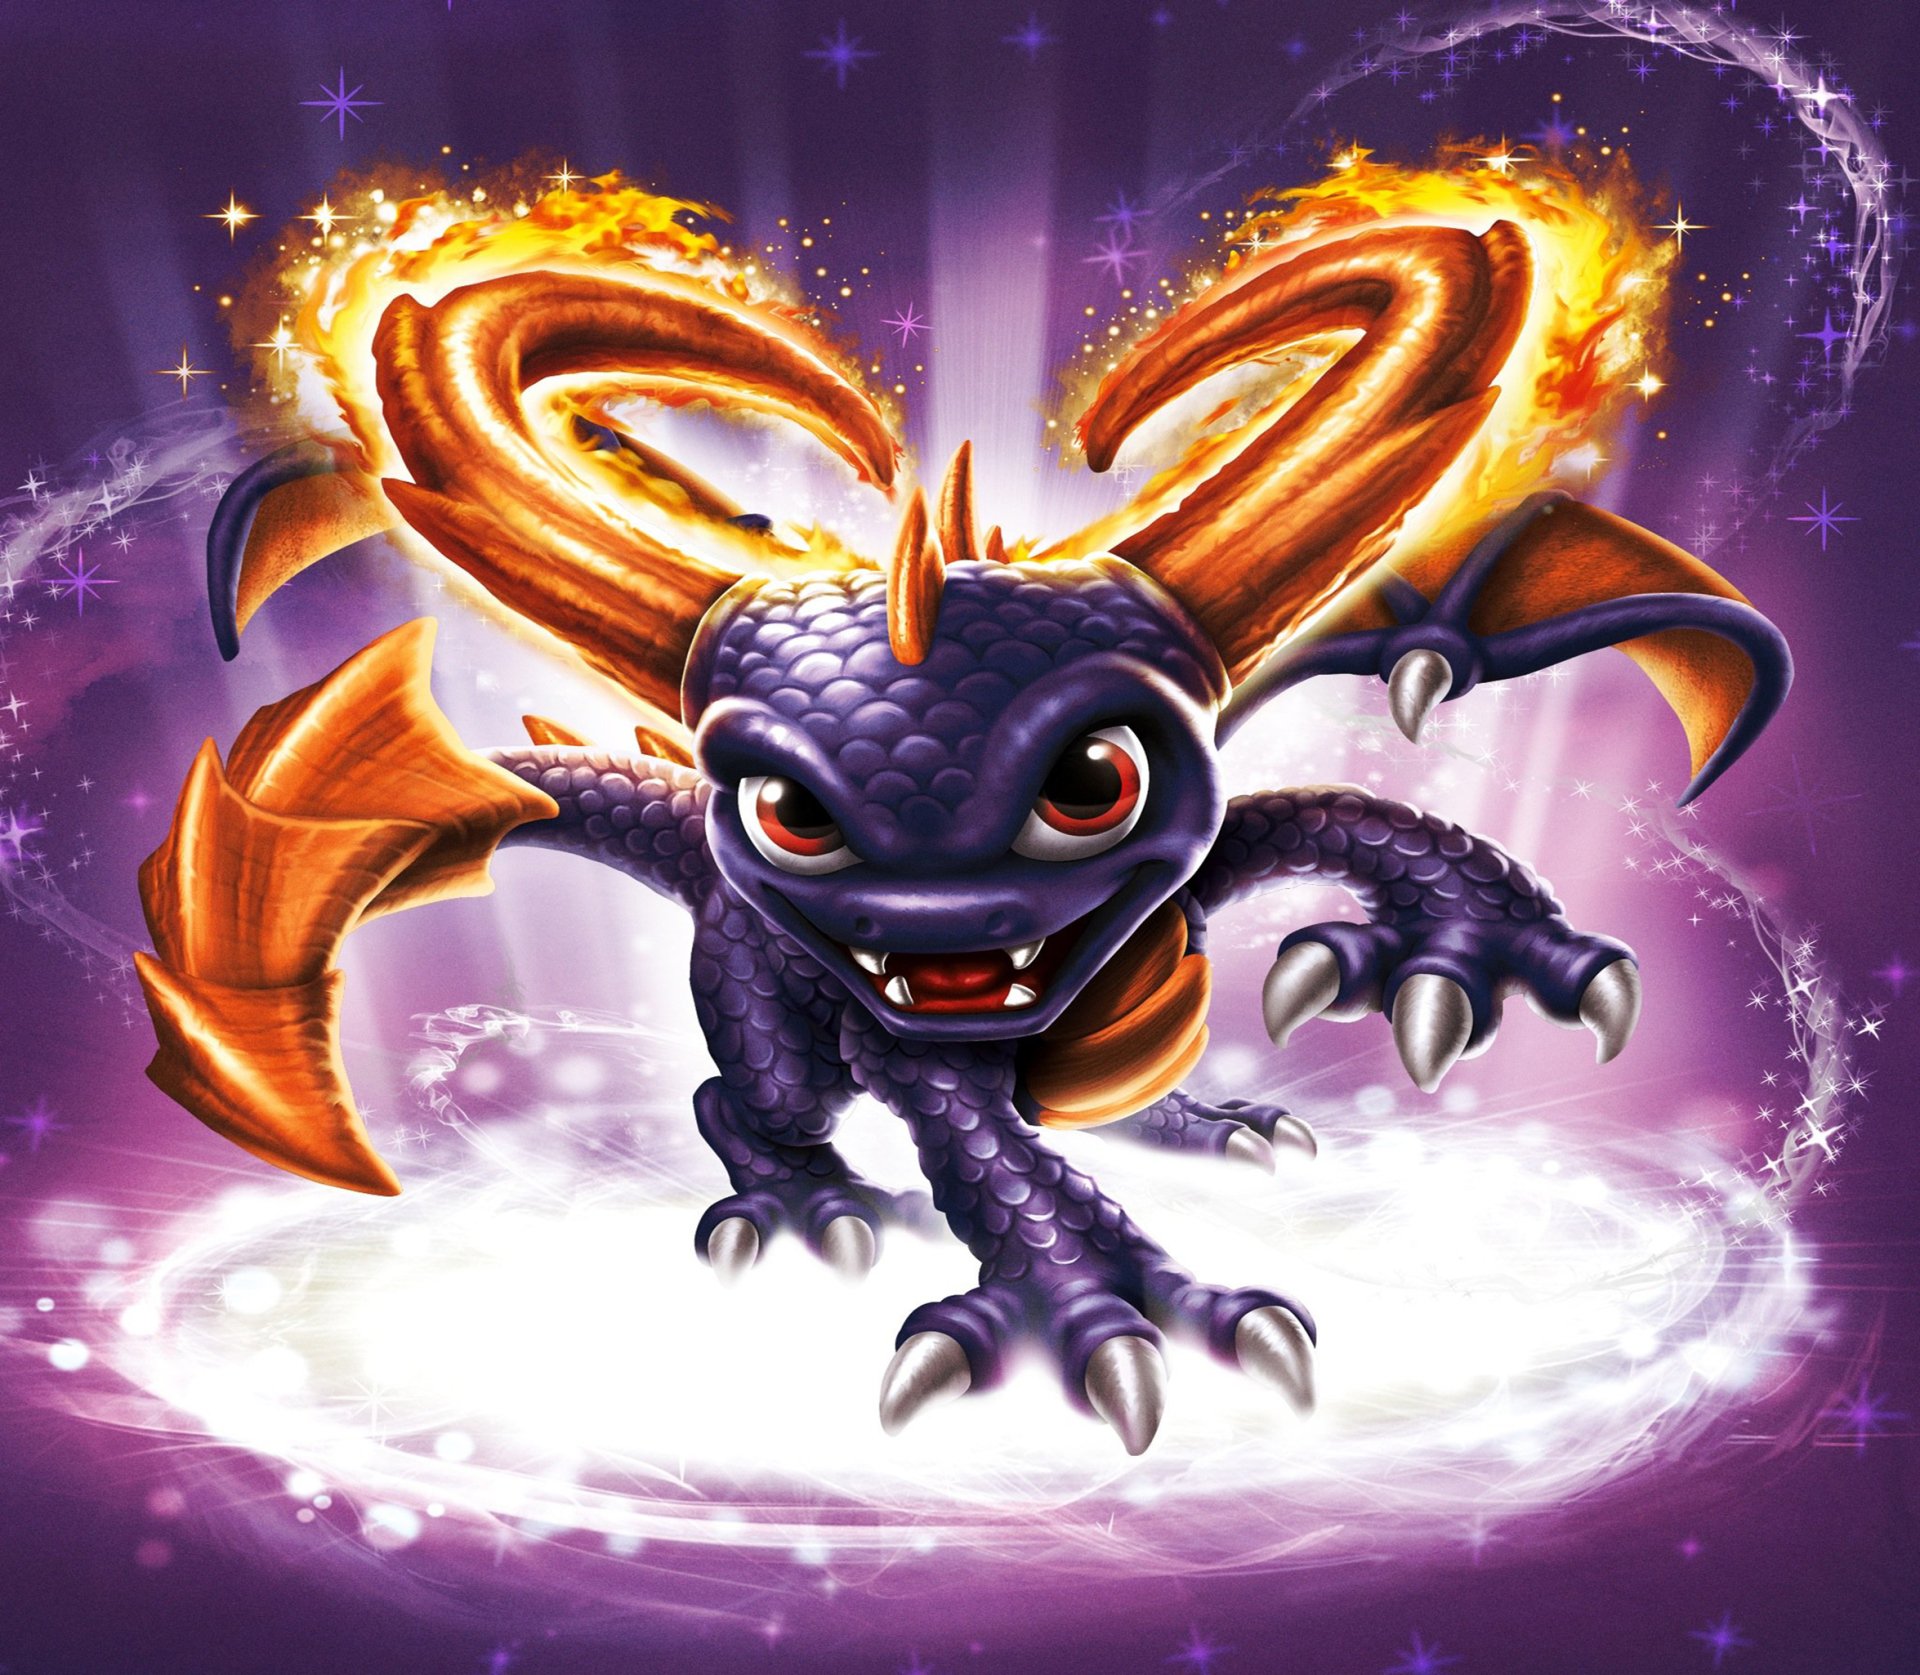 spyro the dragon wallpaper,fictional character,purple,illustration,dragon,cryptid